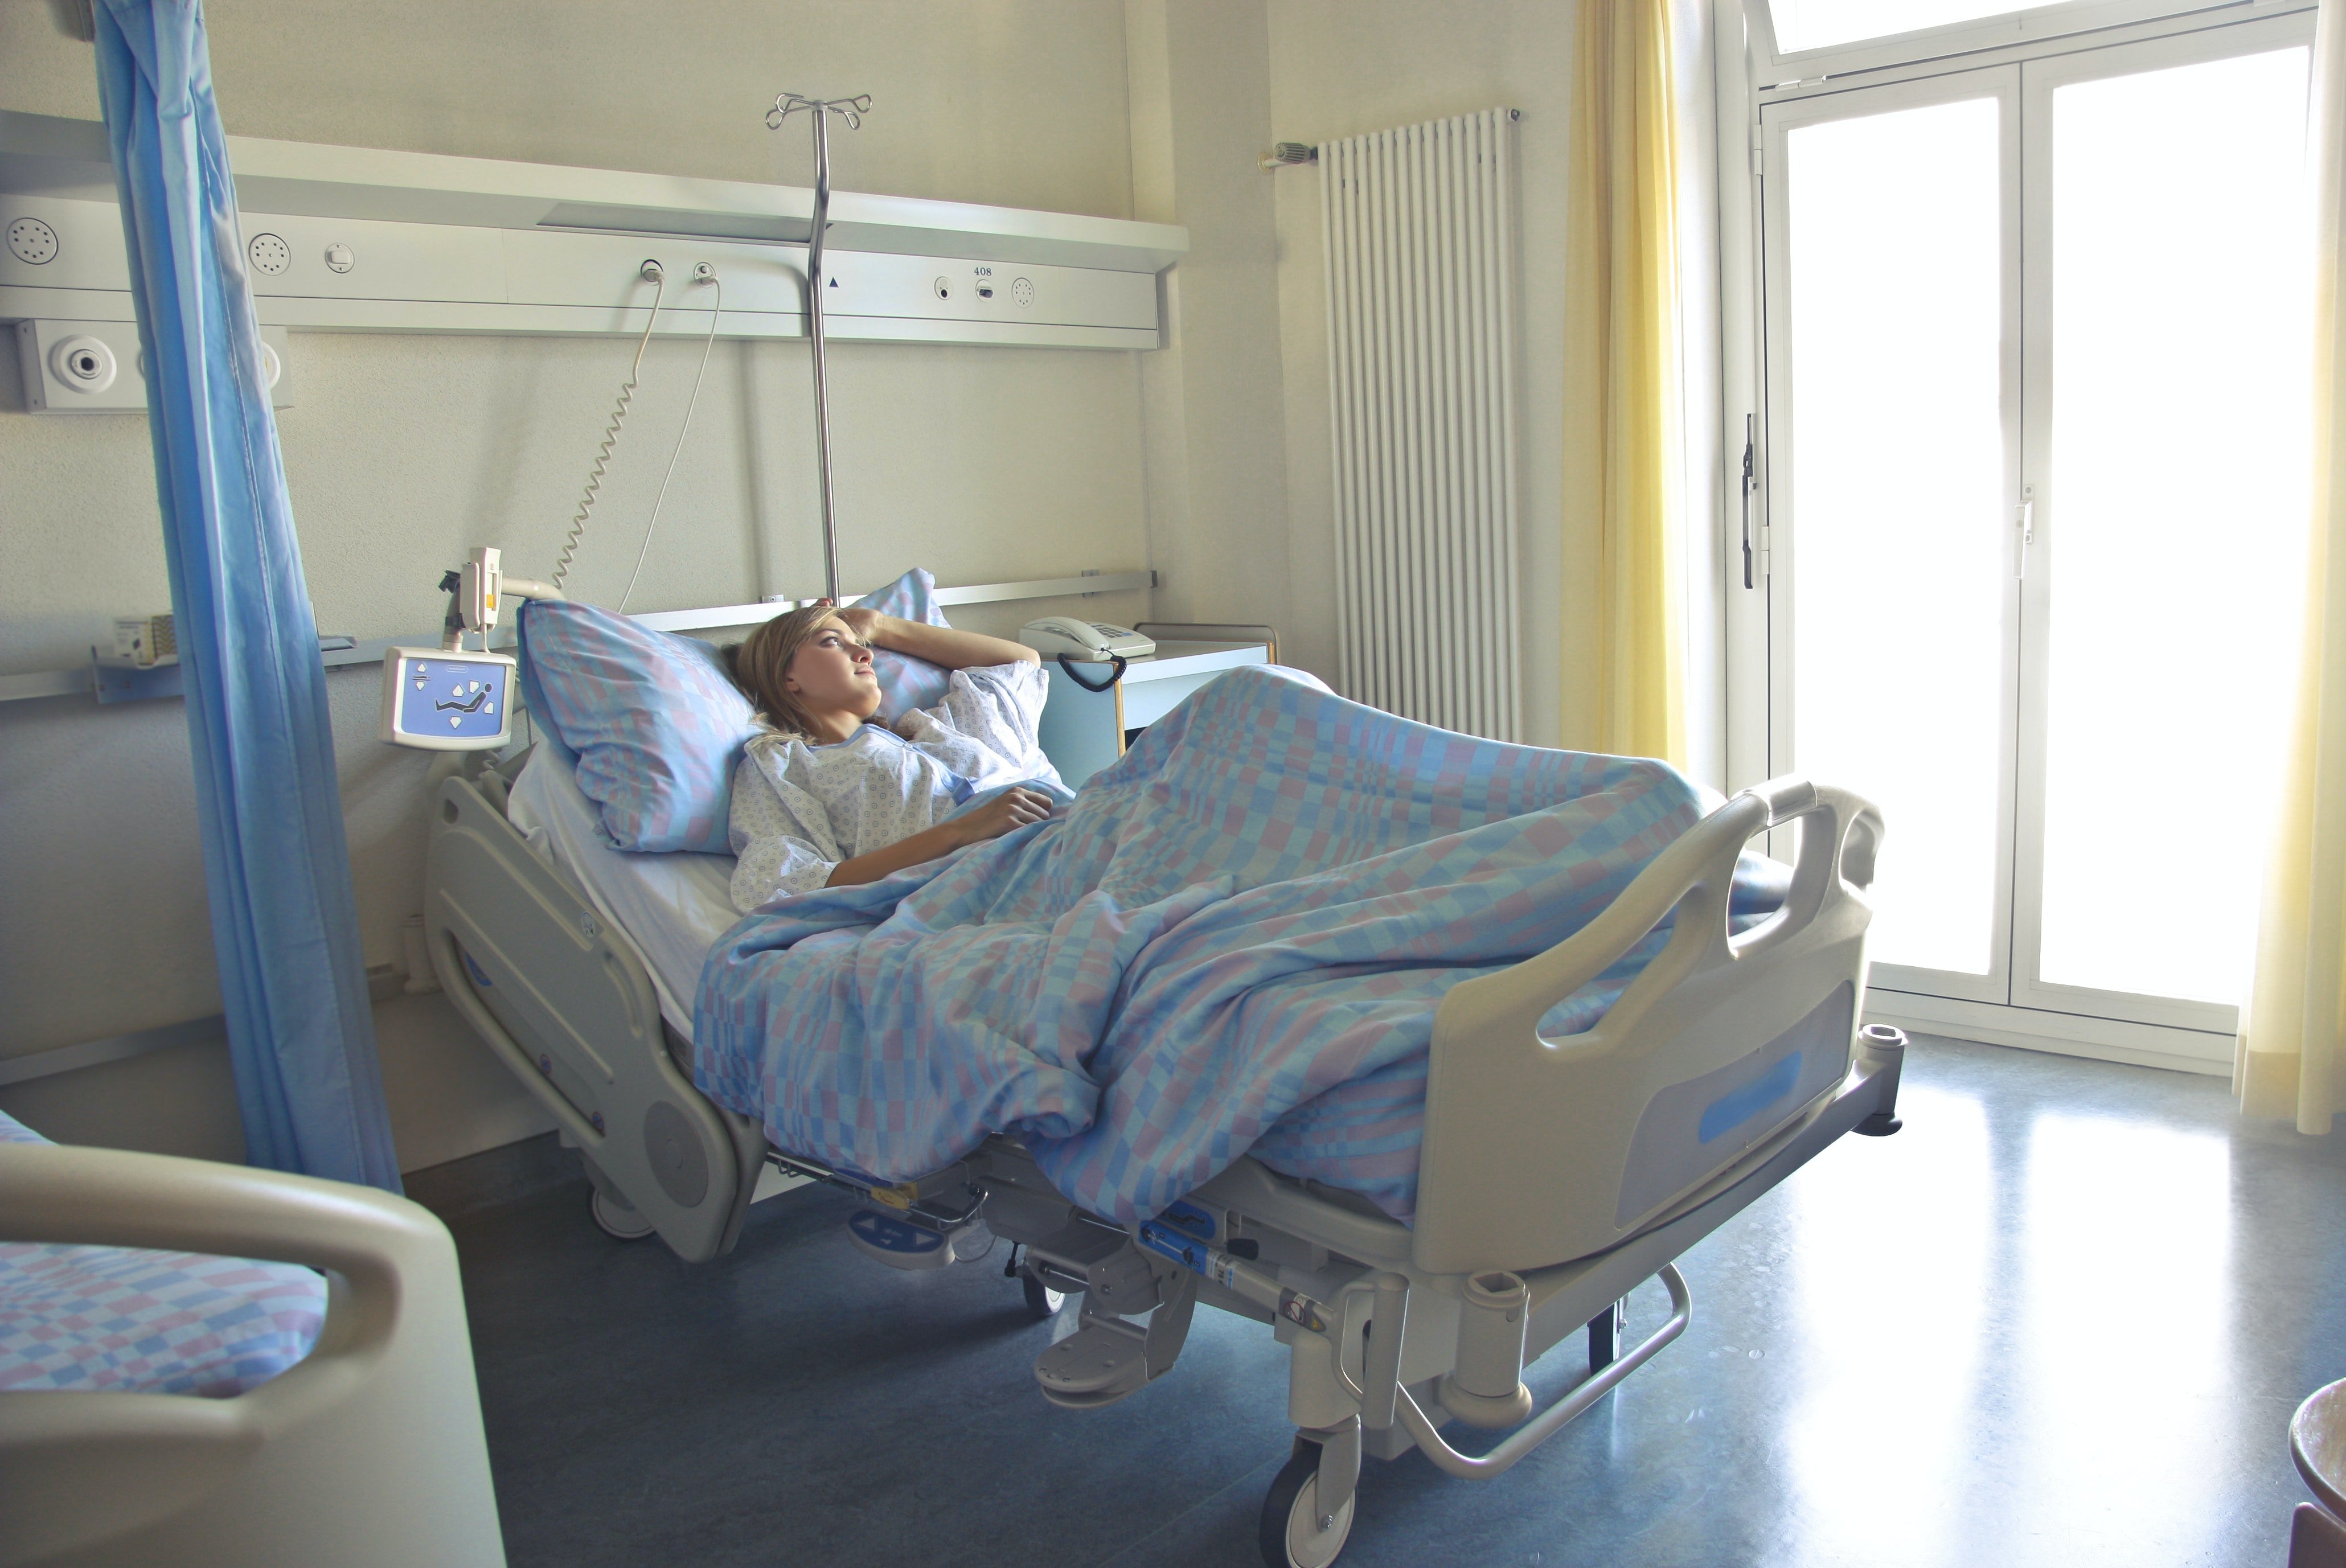 Woman in a hospital bed. | Source: Pexels/Andrea Piacquadio